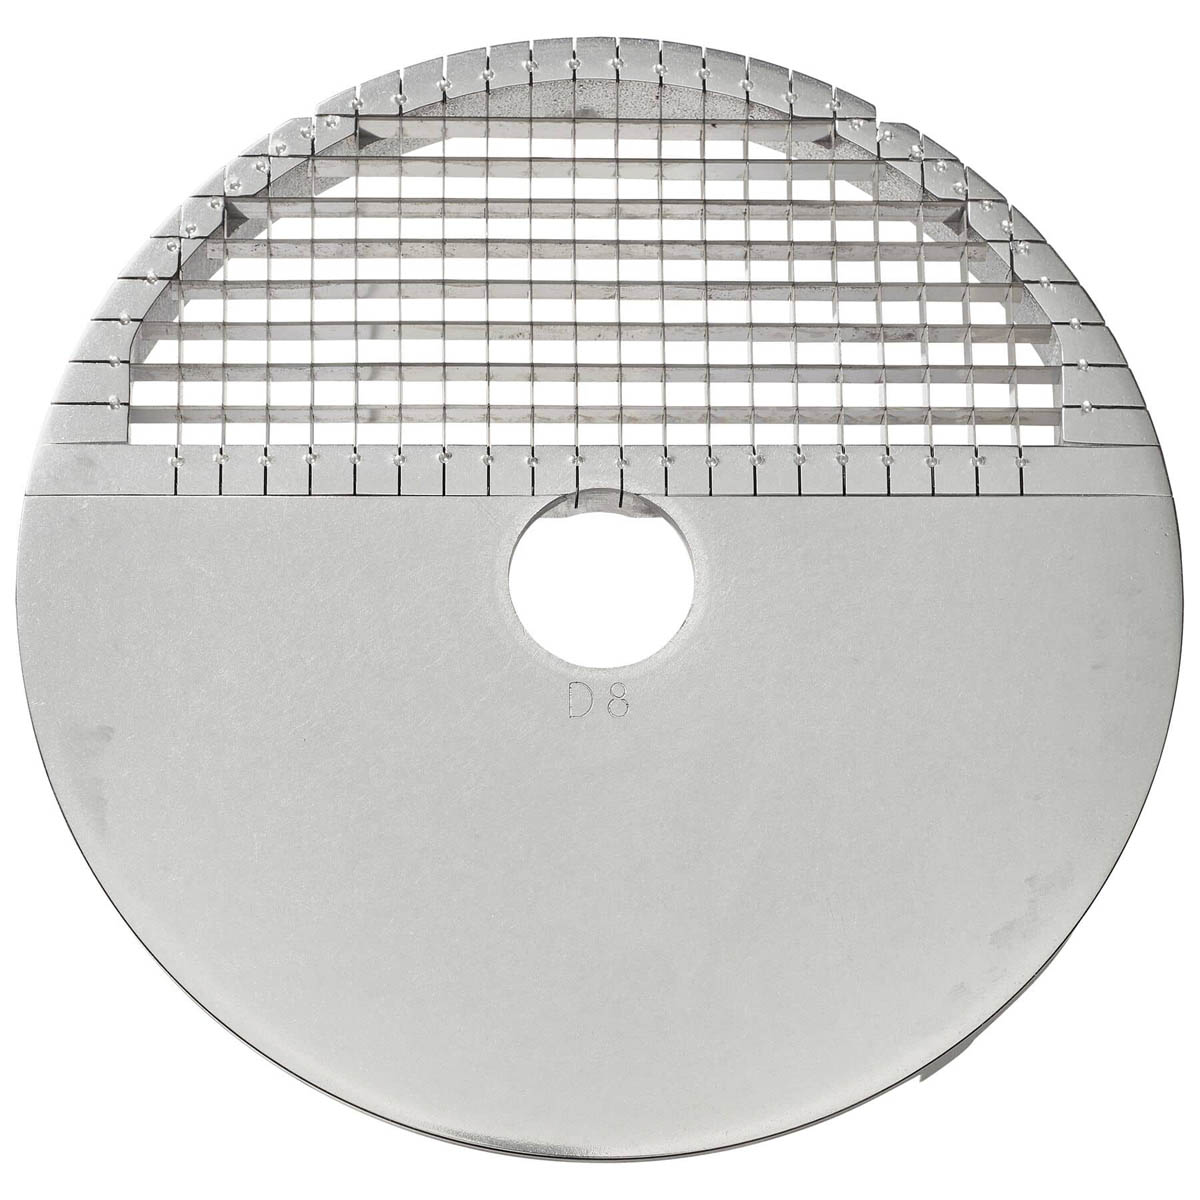 Berkel DICE-D8 Dicing Disc Plate Food Processor